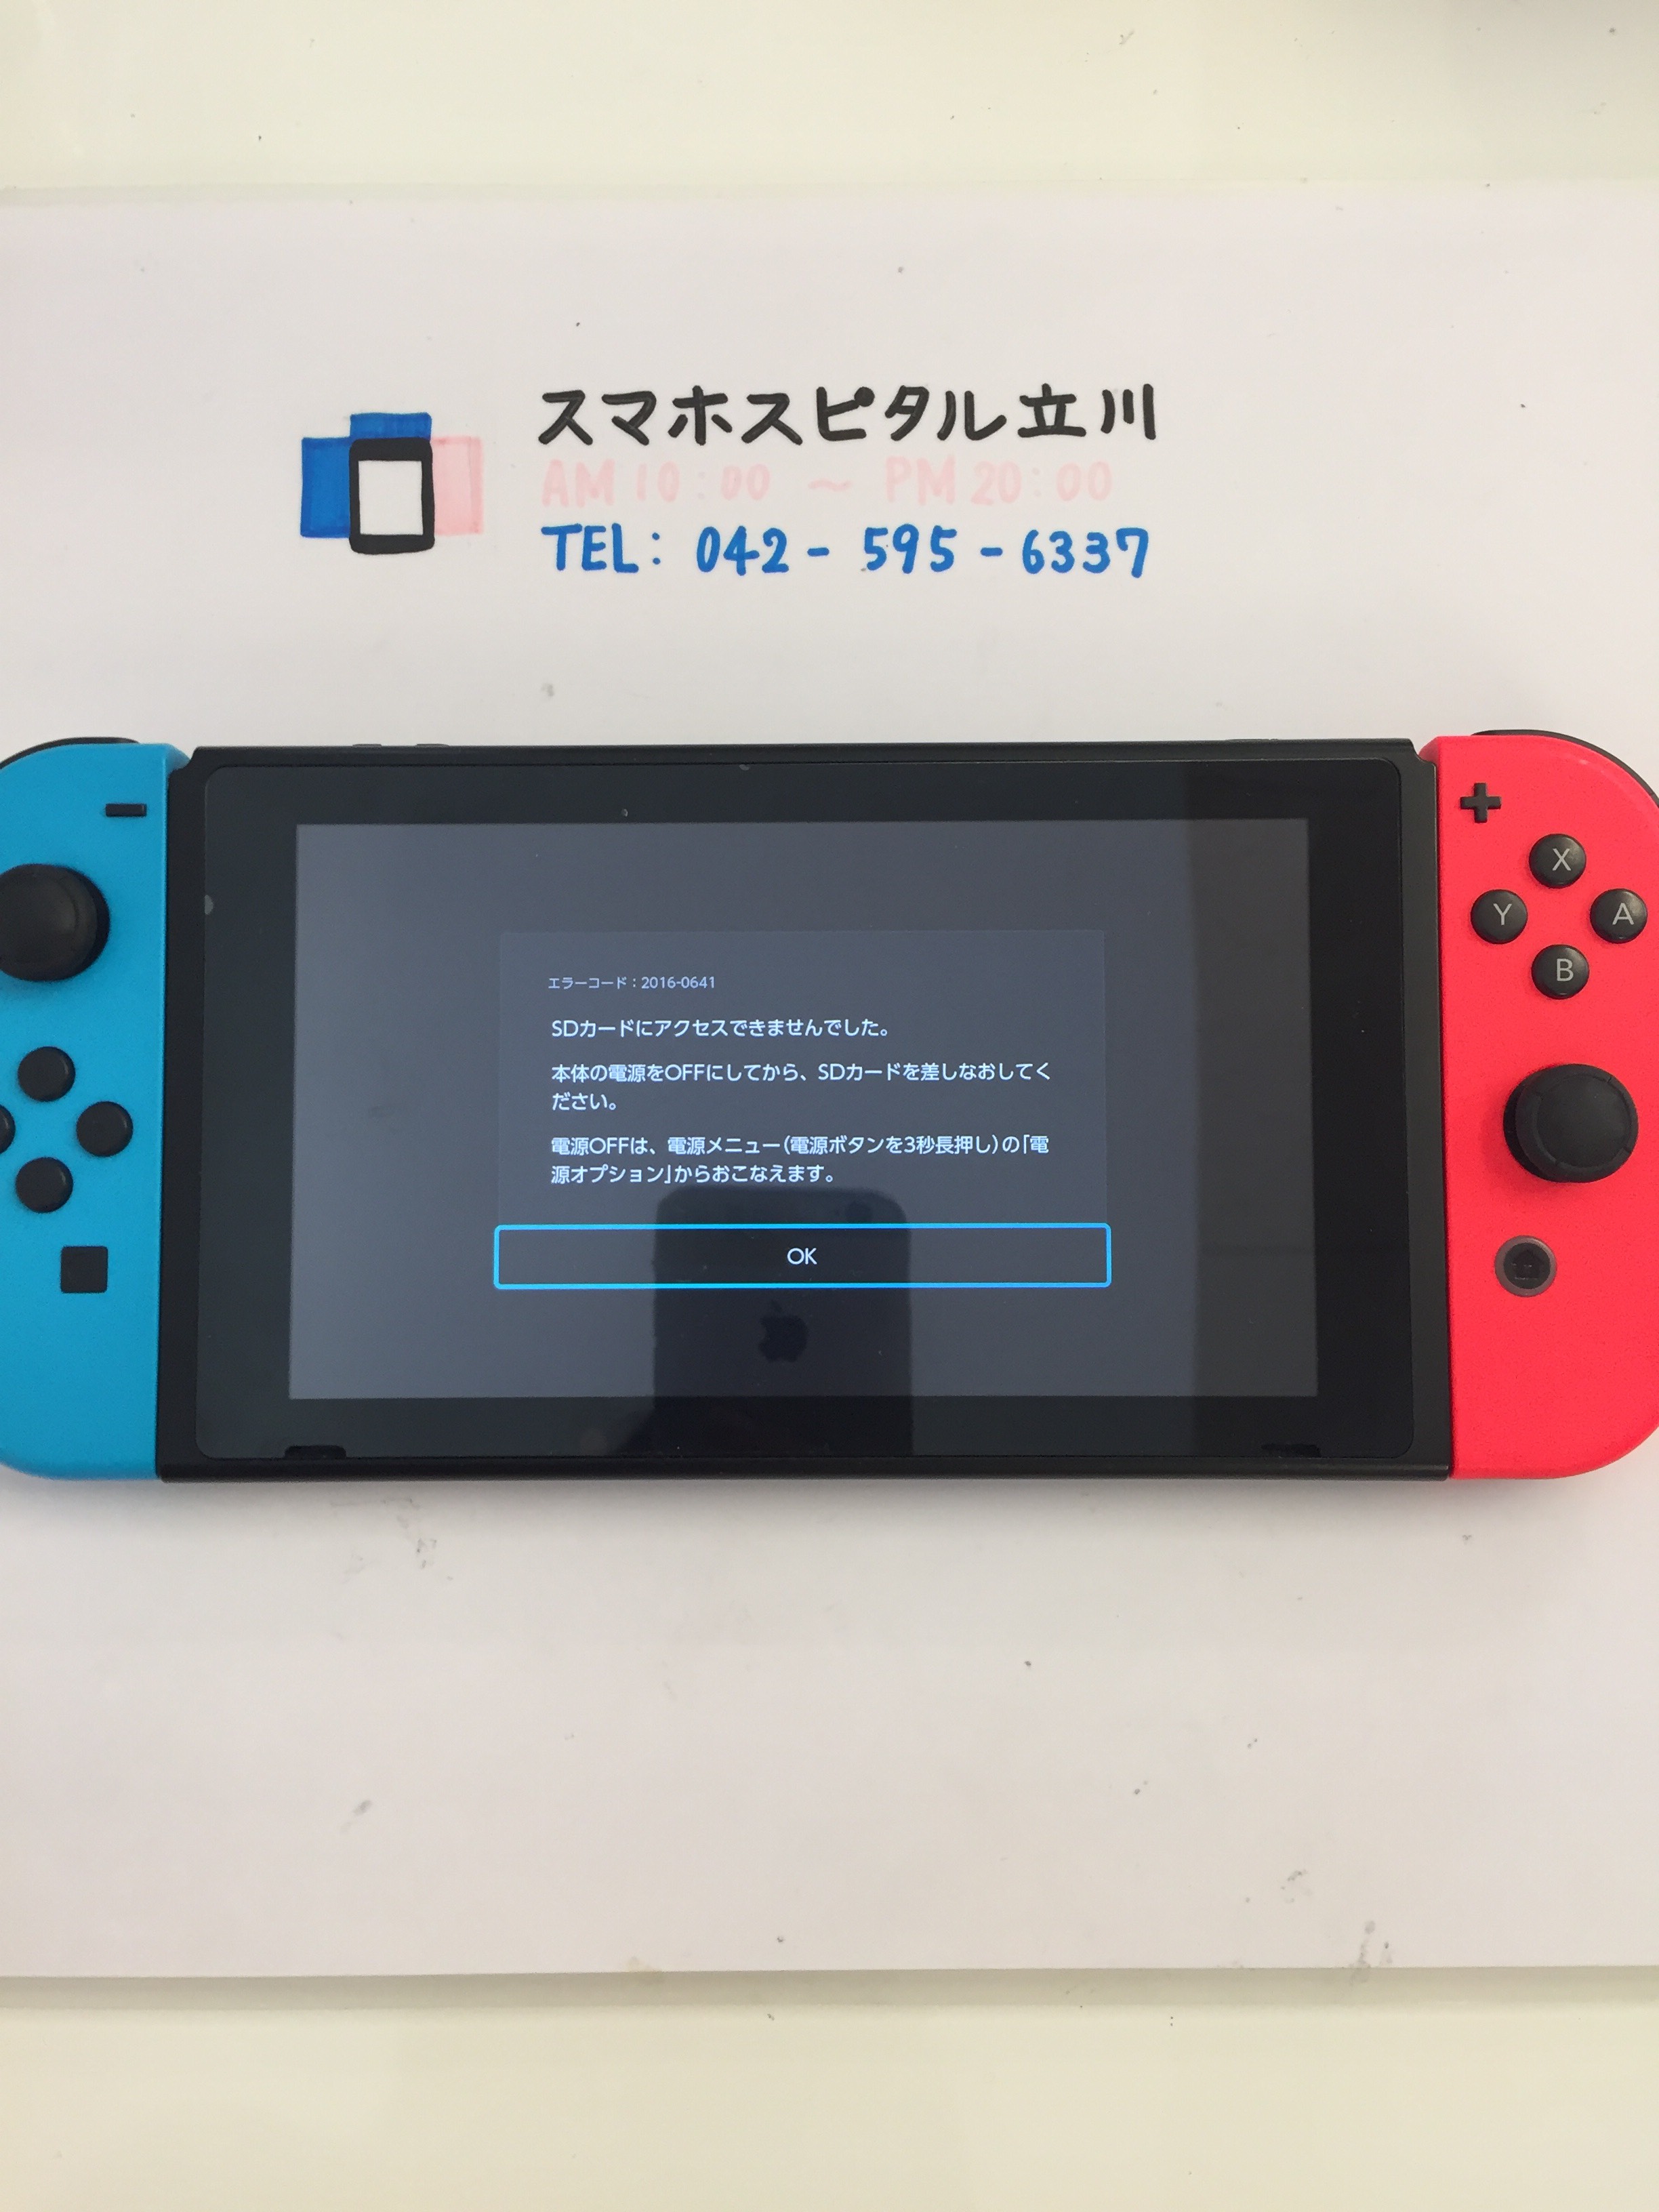 Nintendo Switch Sdカードを差し込むとエラーが発生 アクセス拒否されるsdの修理 Nintendo3ds Switch Psp 修理のゲームホスピタル Nintendo3ds ニンテンドーds Psp Switch 修理